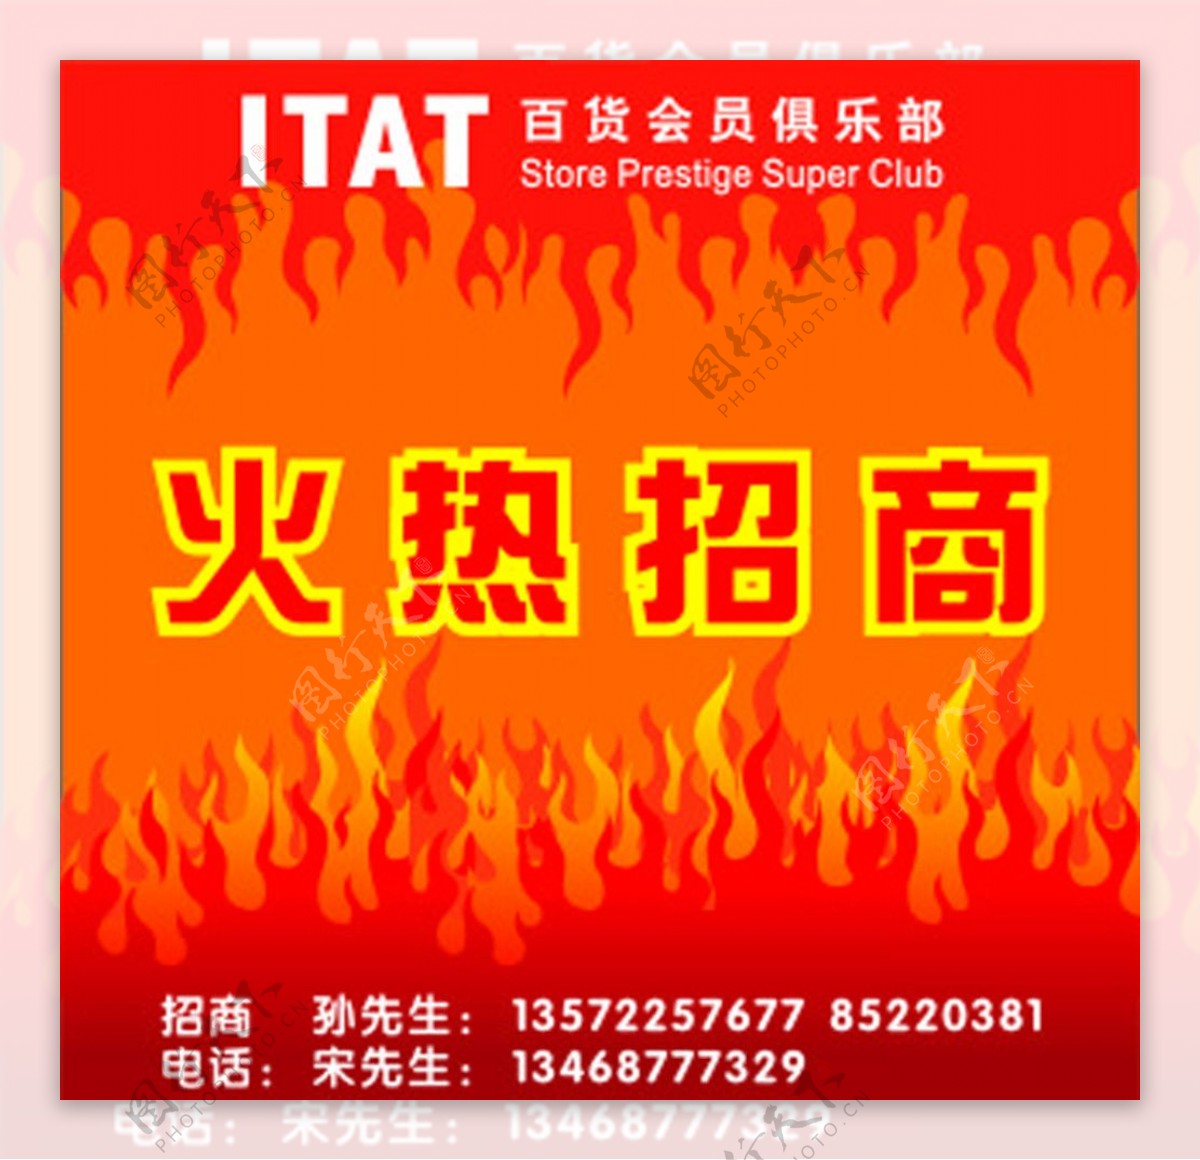 ITAT百货会员火热招商图片